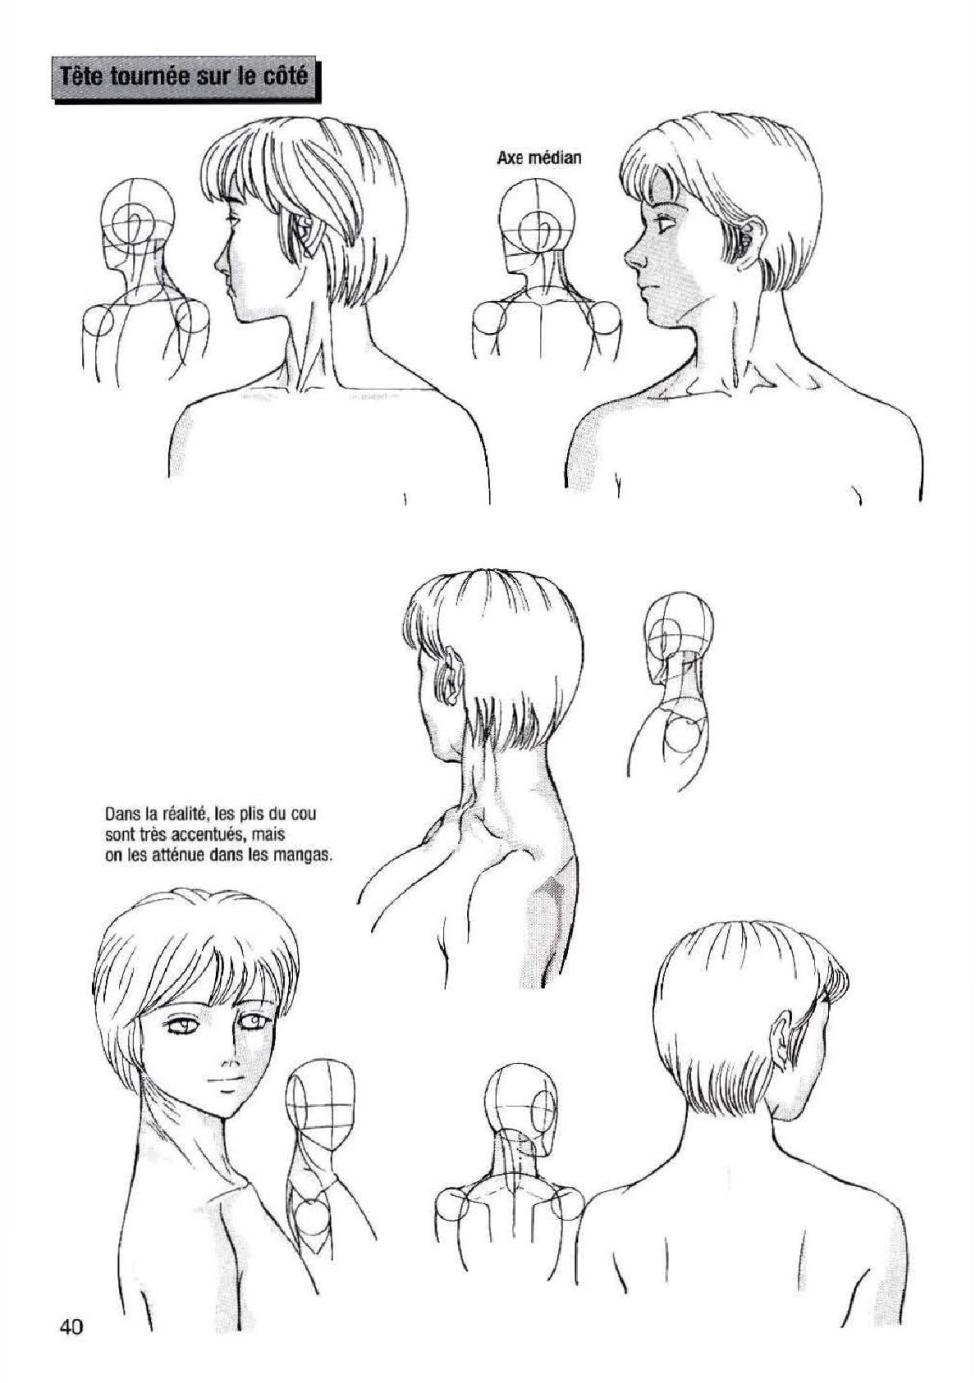 How To Draw Manga Vol. 25 Bodies and Anatomy - Page 40